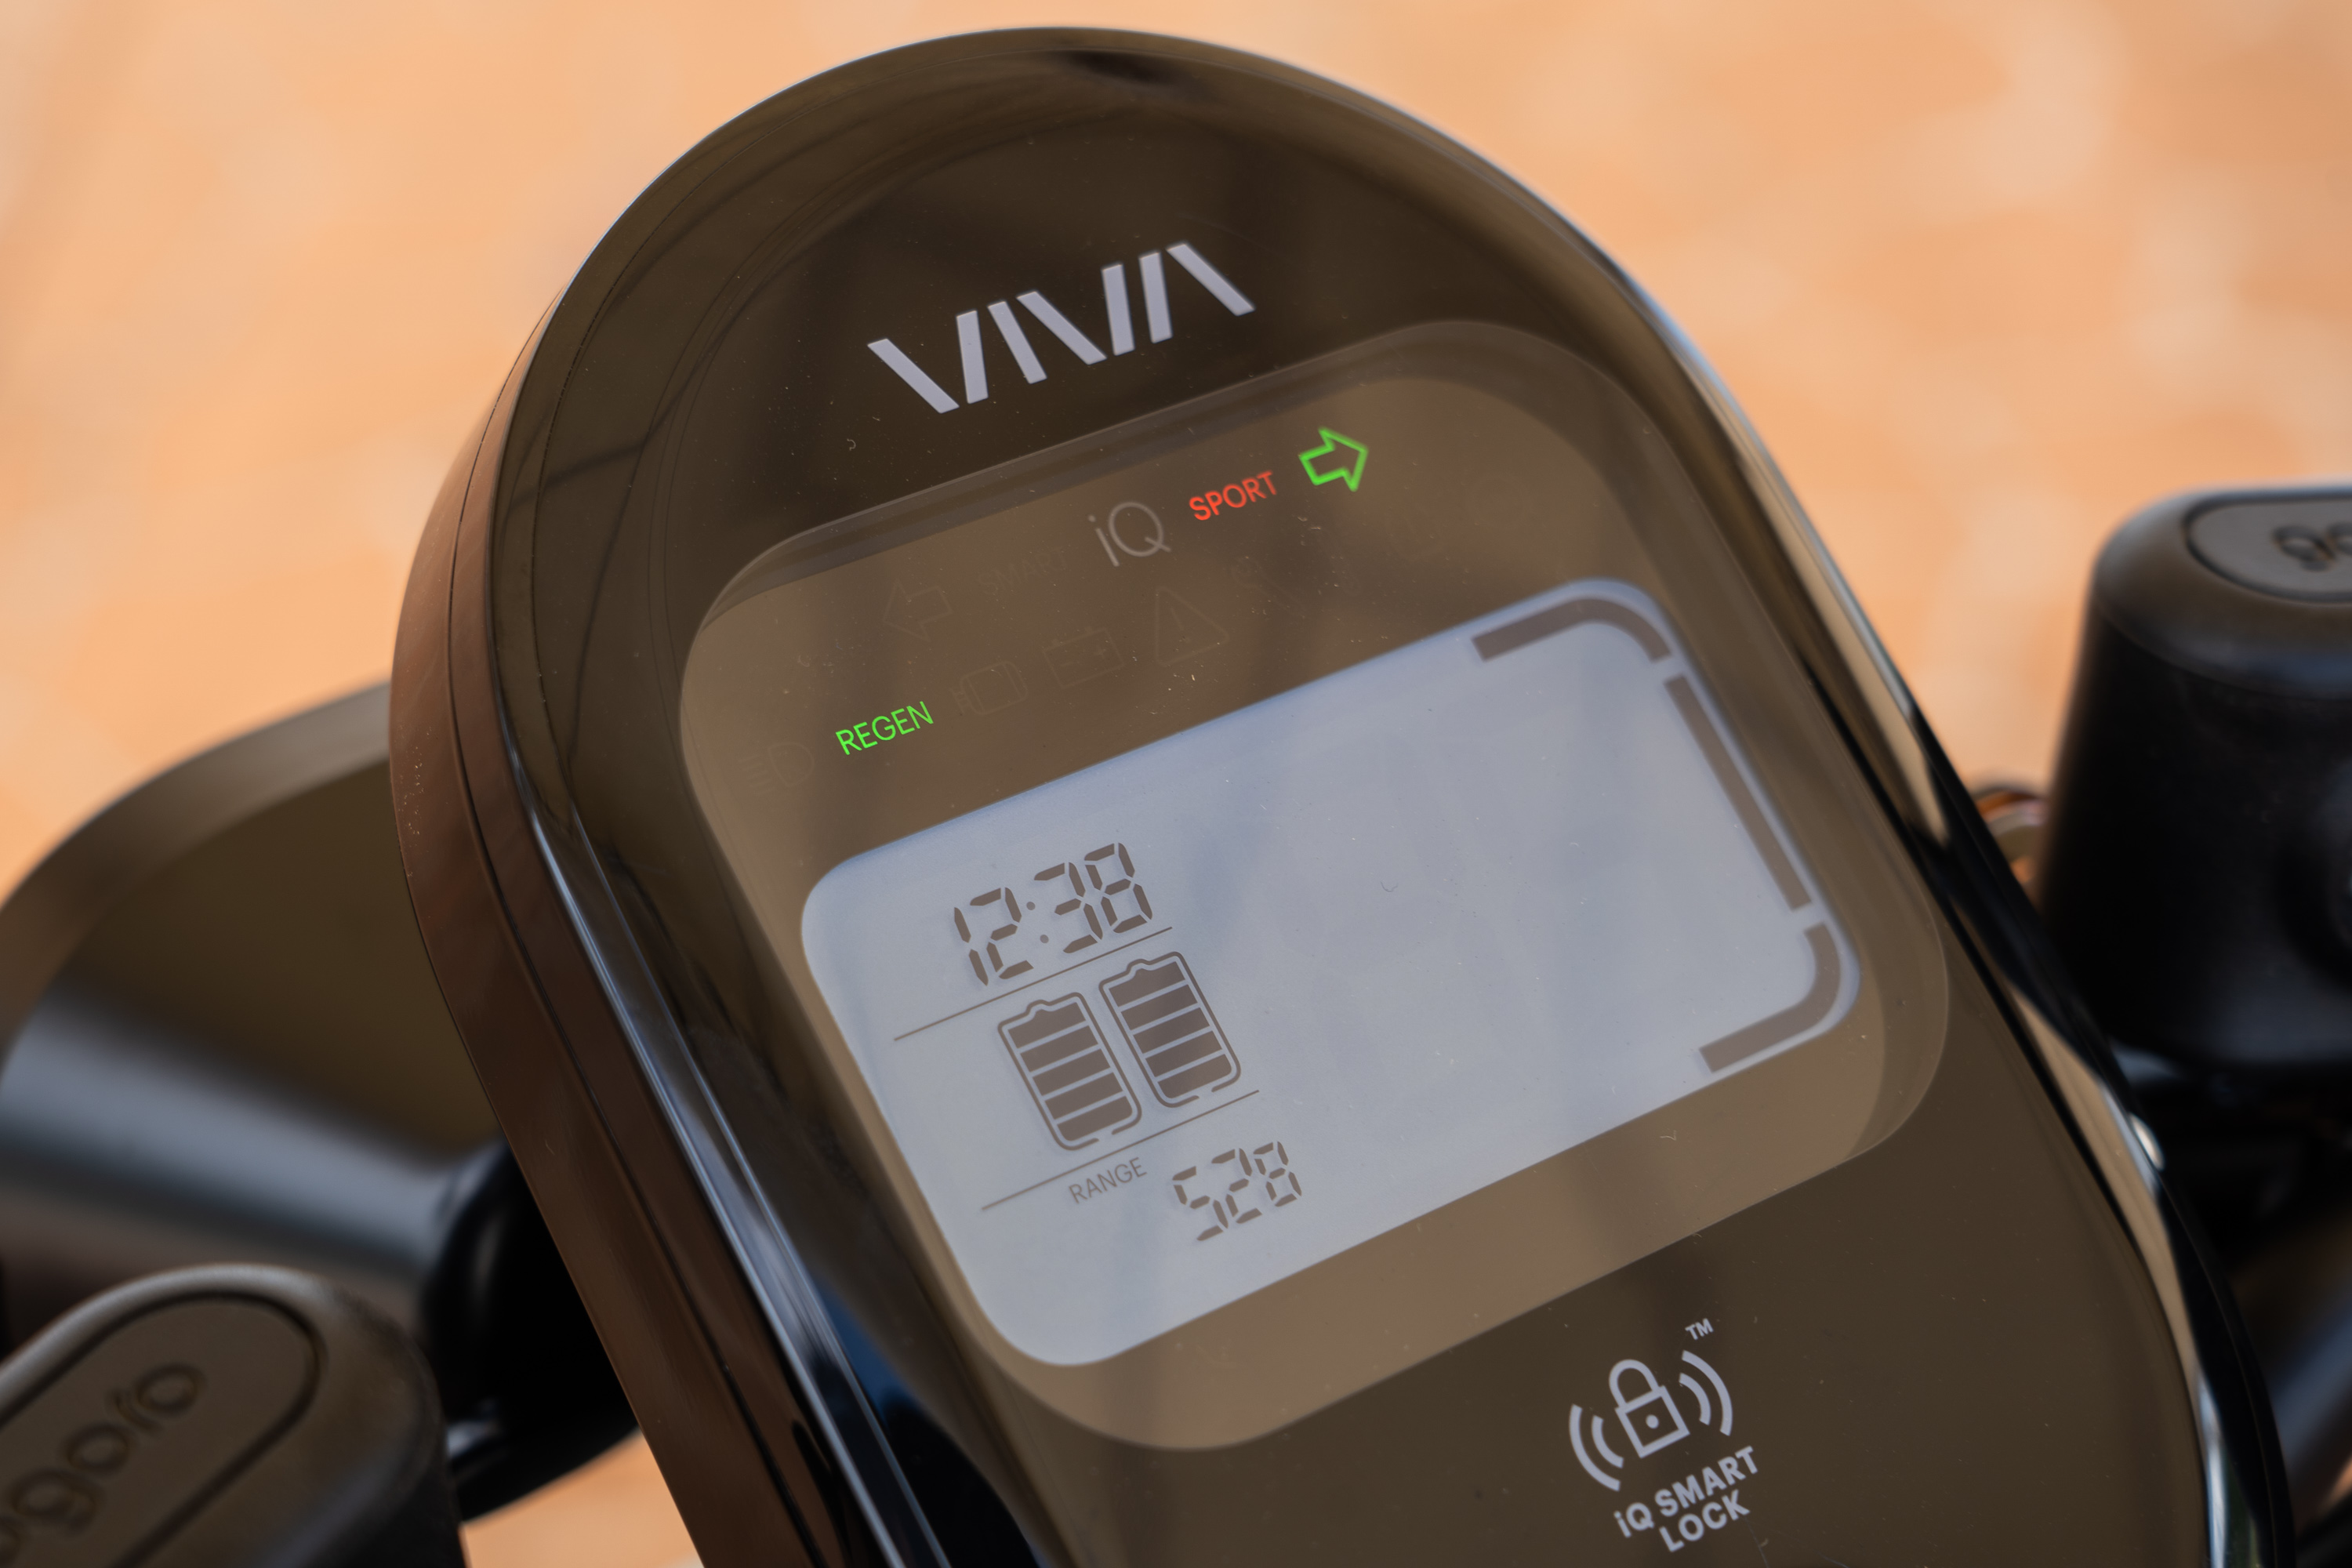 VIVA XL 儀表板設計與 VIVA MIX 設計略有不同，多了外框，在啟動方向燈時同向外框會閃爍增加辨識度。 